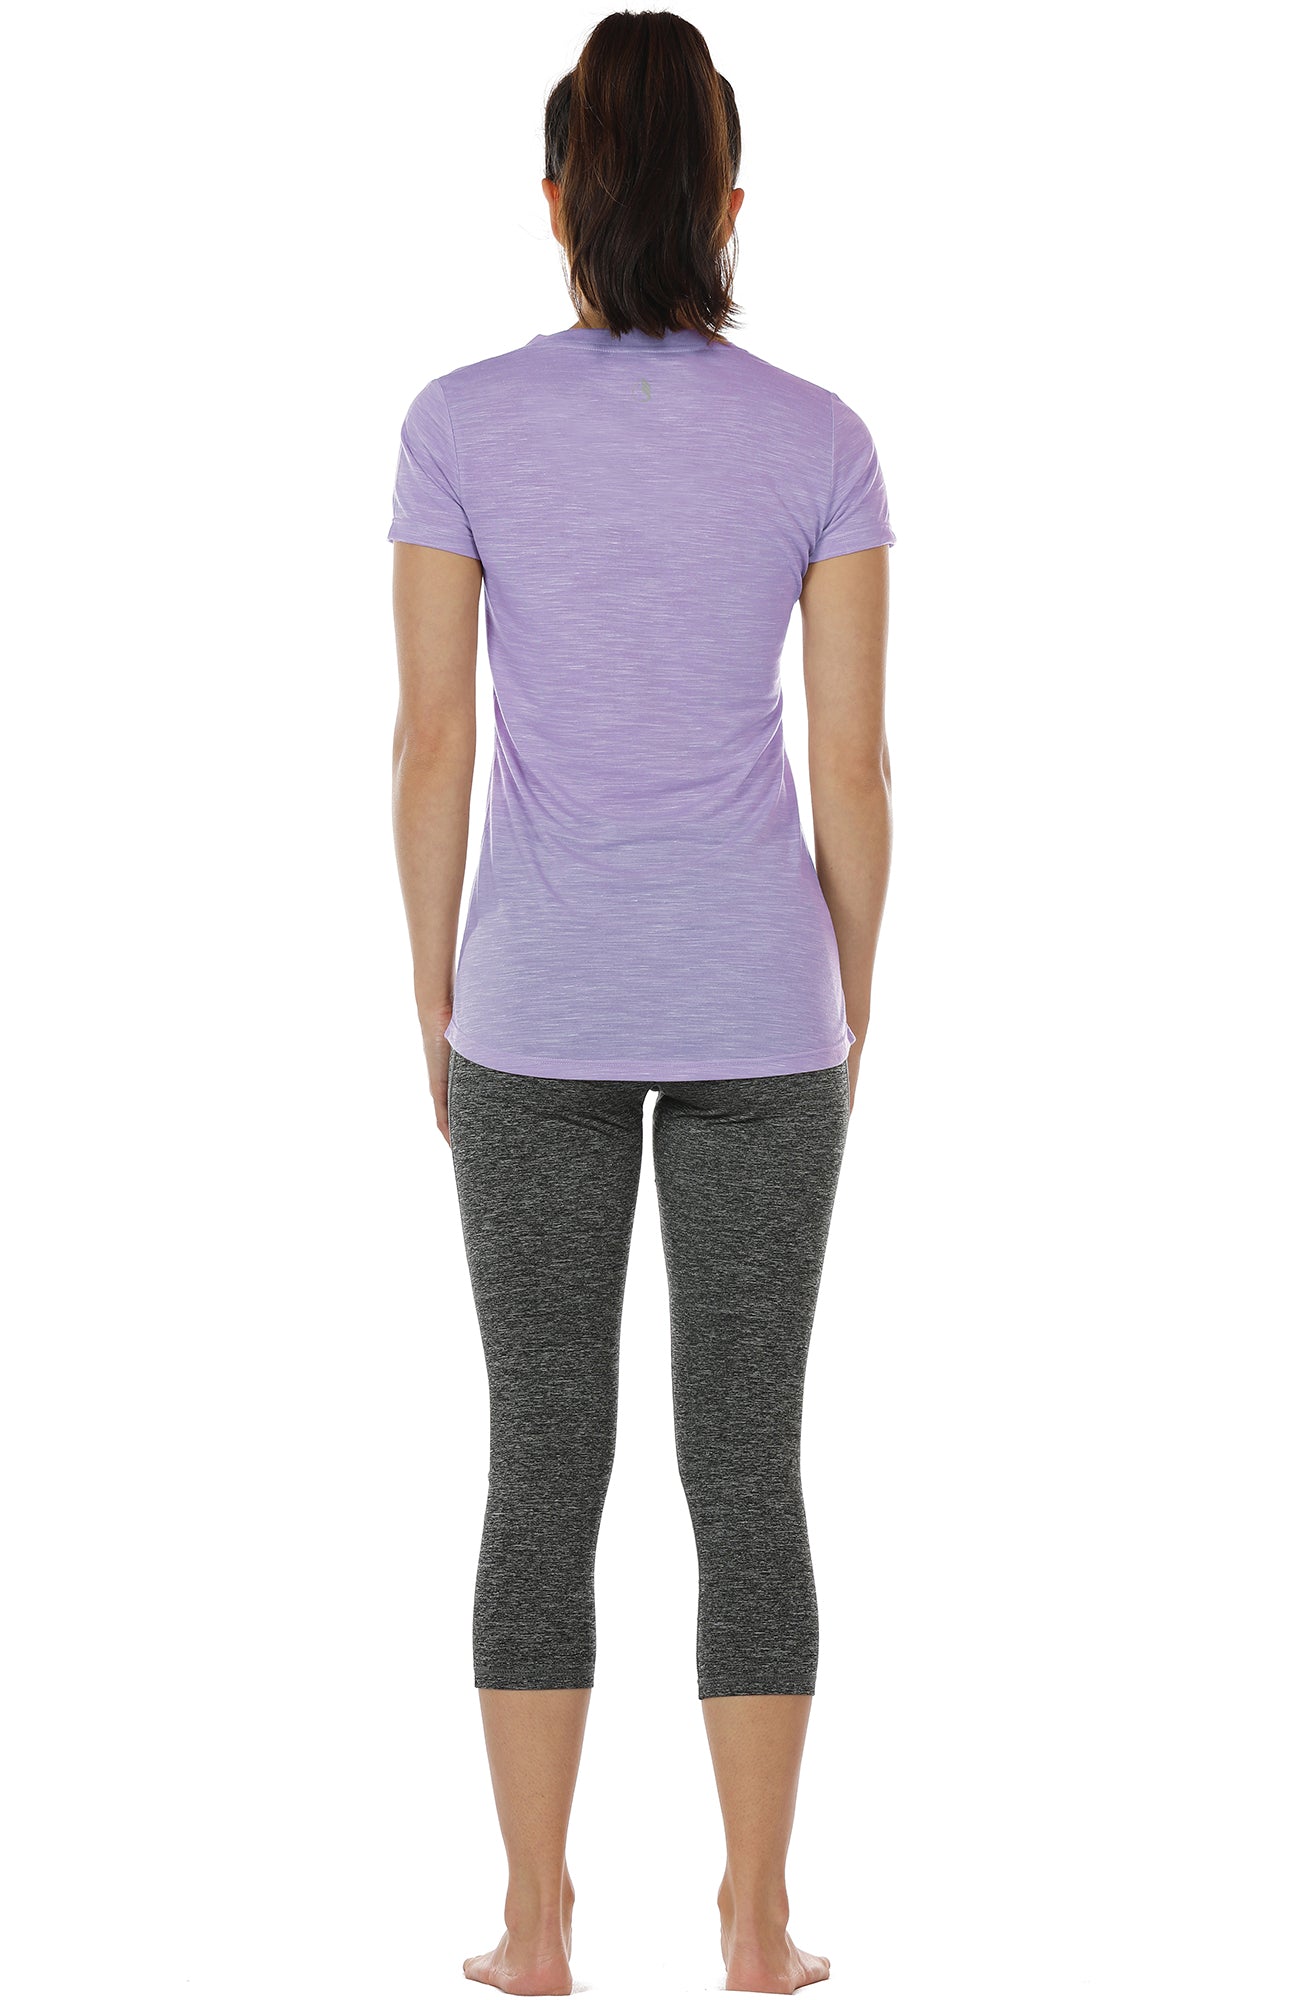 Bonivenshion Women's Short Sleeve Workout Shirts Quick Dry Yoga